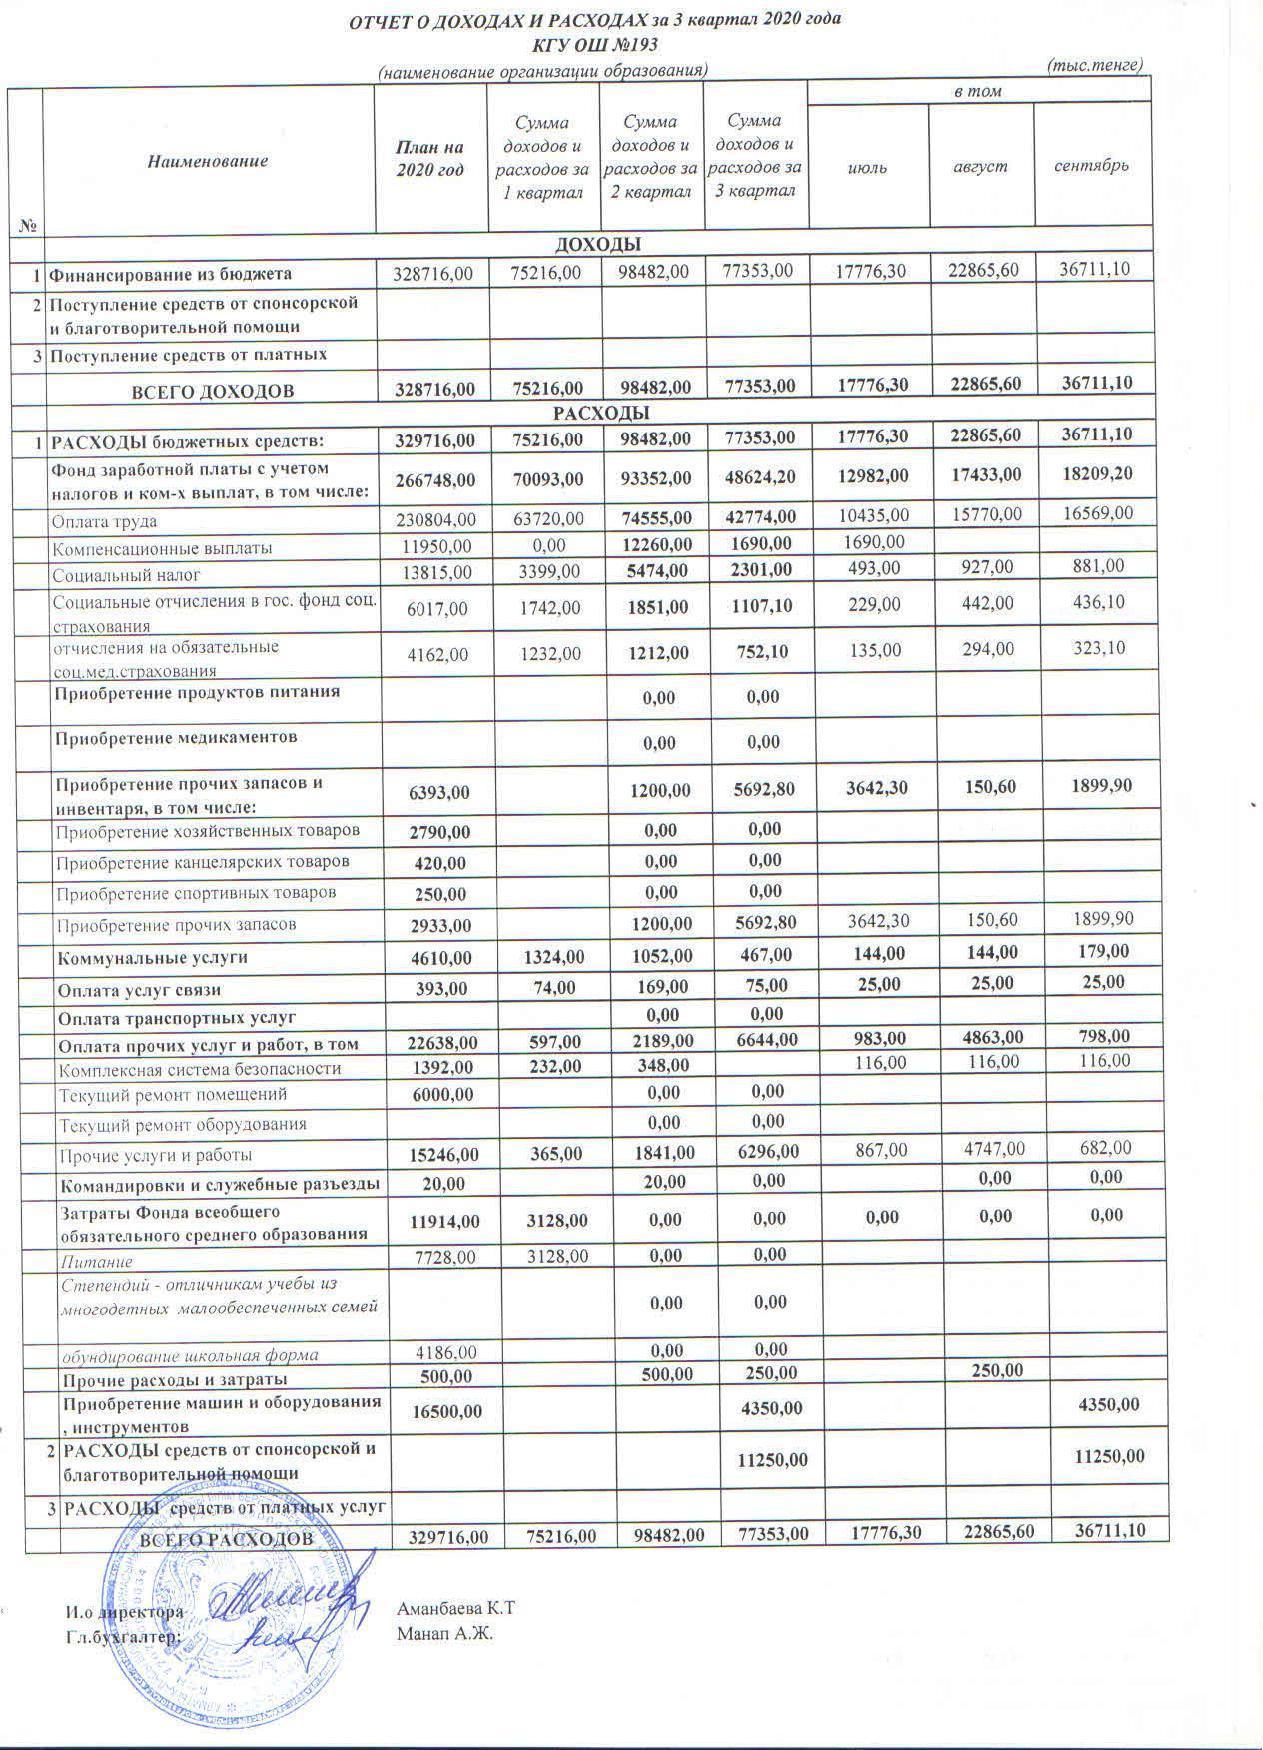 Отчет о доходах и расходах за 3 кв 2020